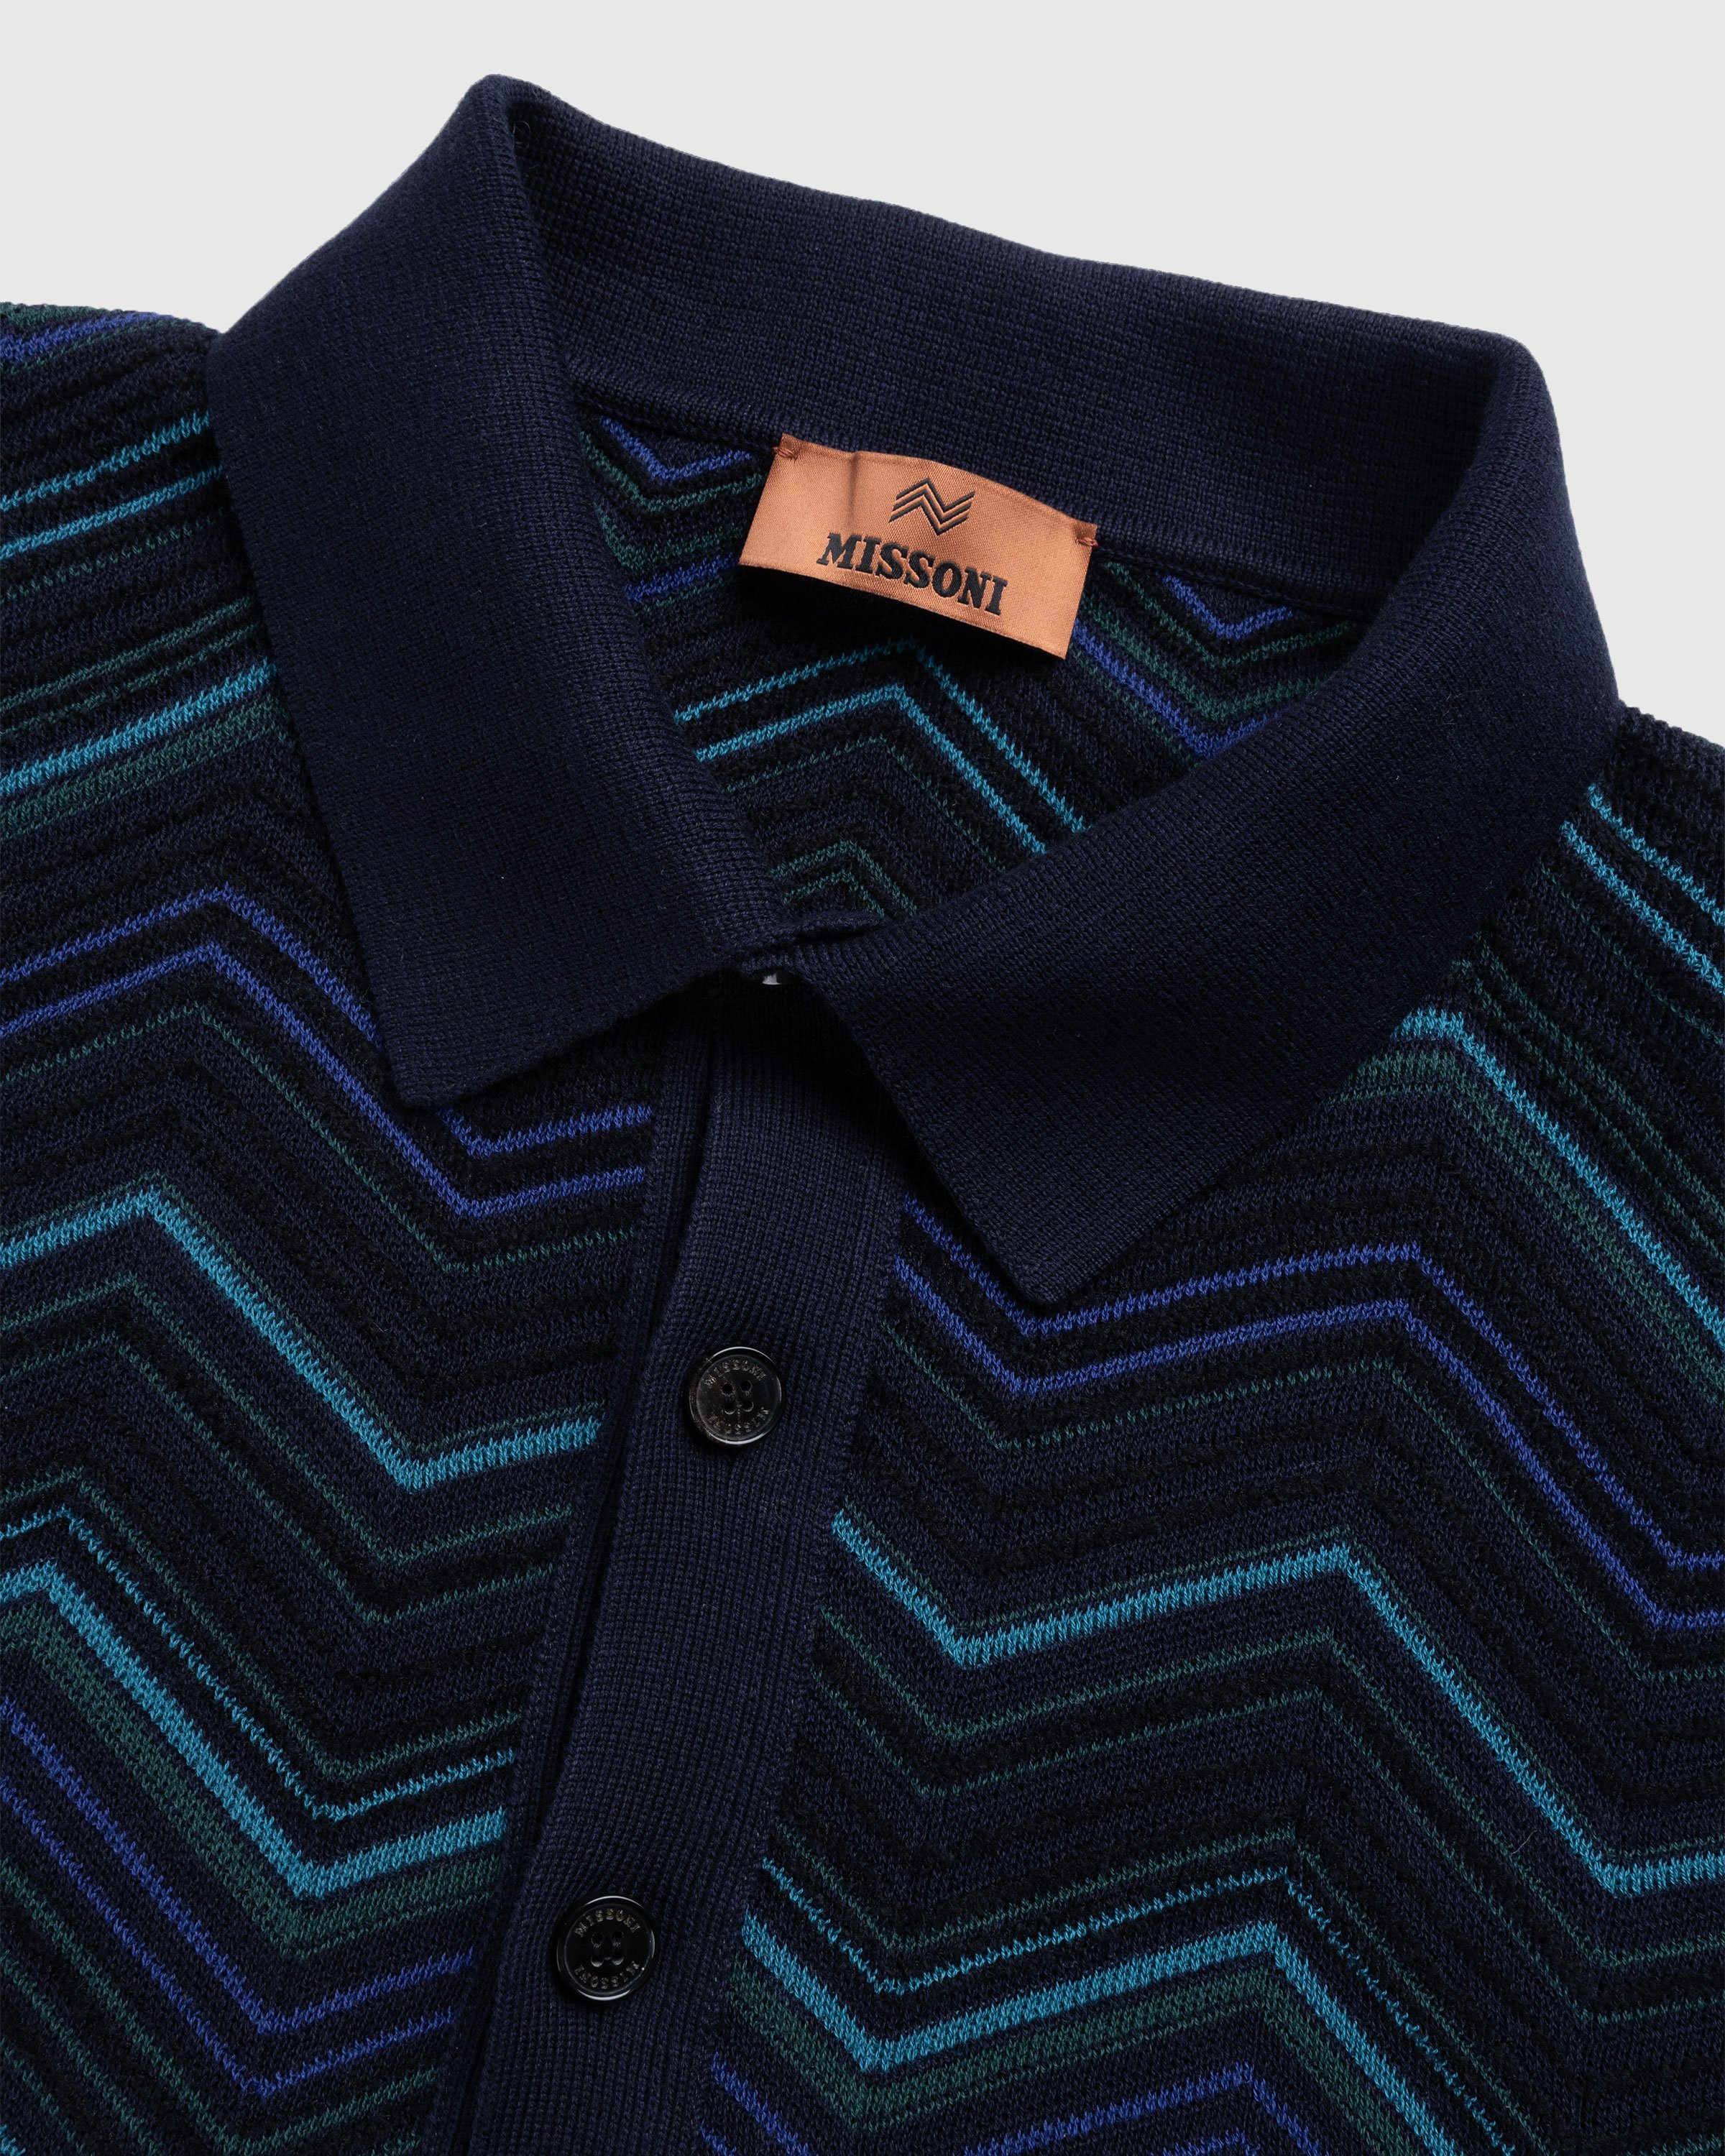 Missoni - Zig Zag Polo Shirt Blue/Green/Coal - Clothing - Multi - Image 5